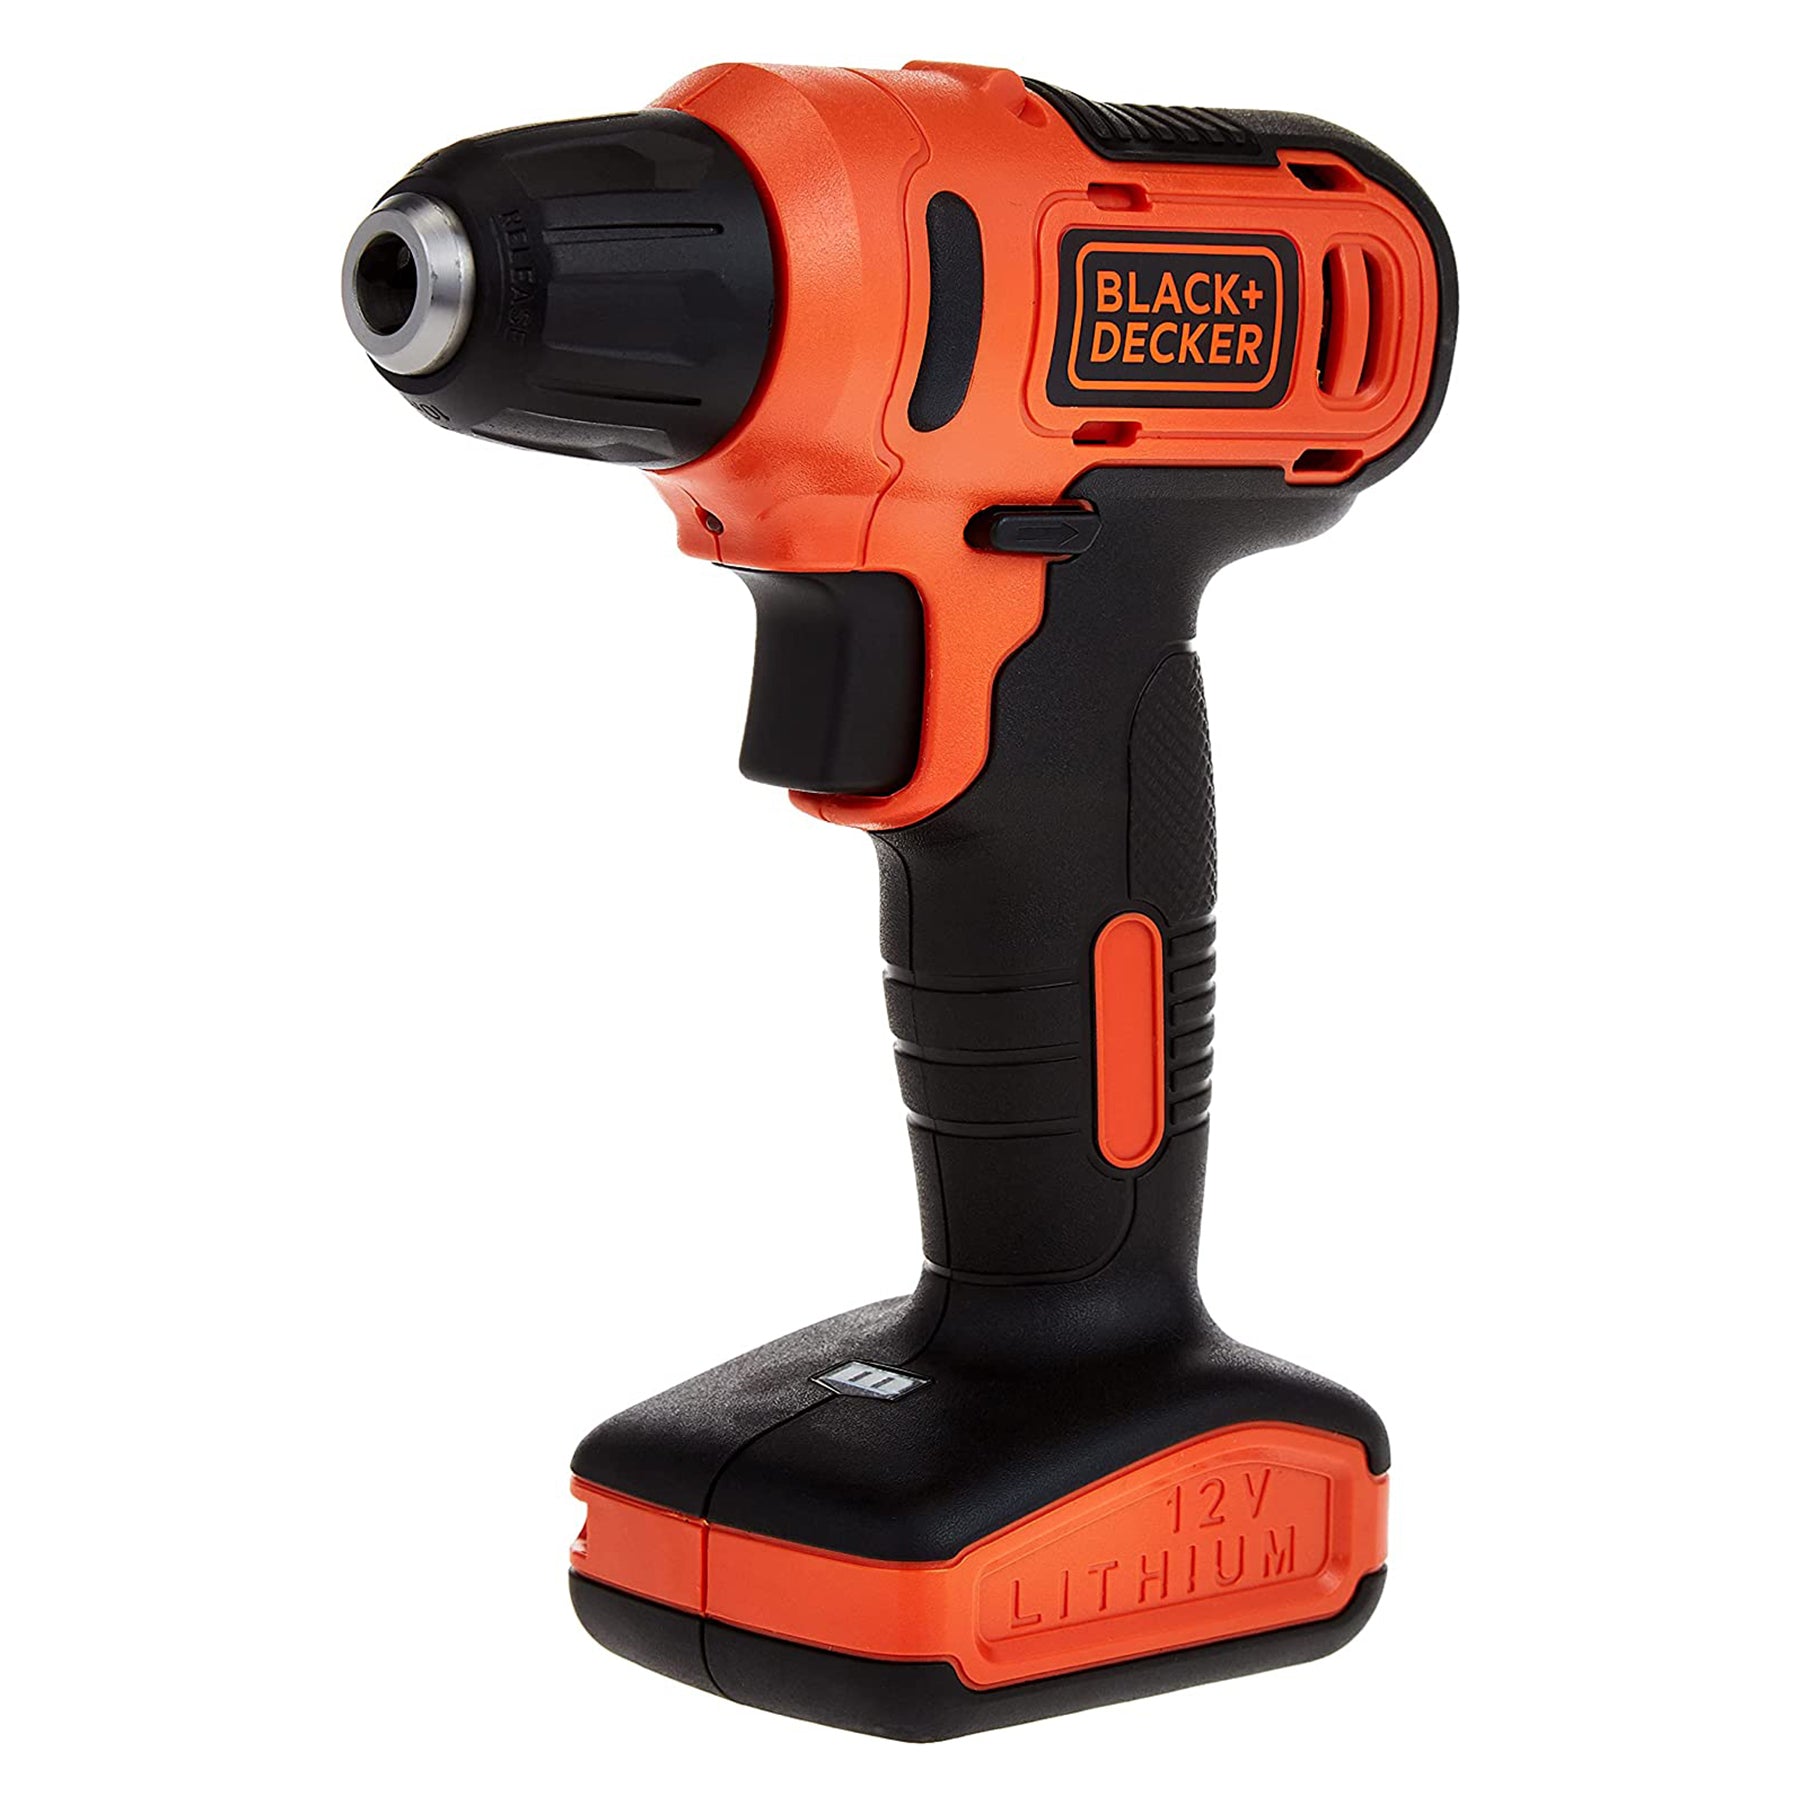 Driver drill, Orange and blackPower: 12 volt